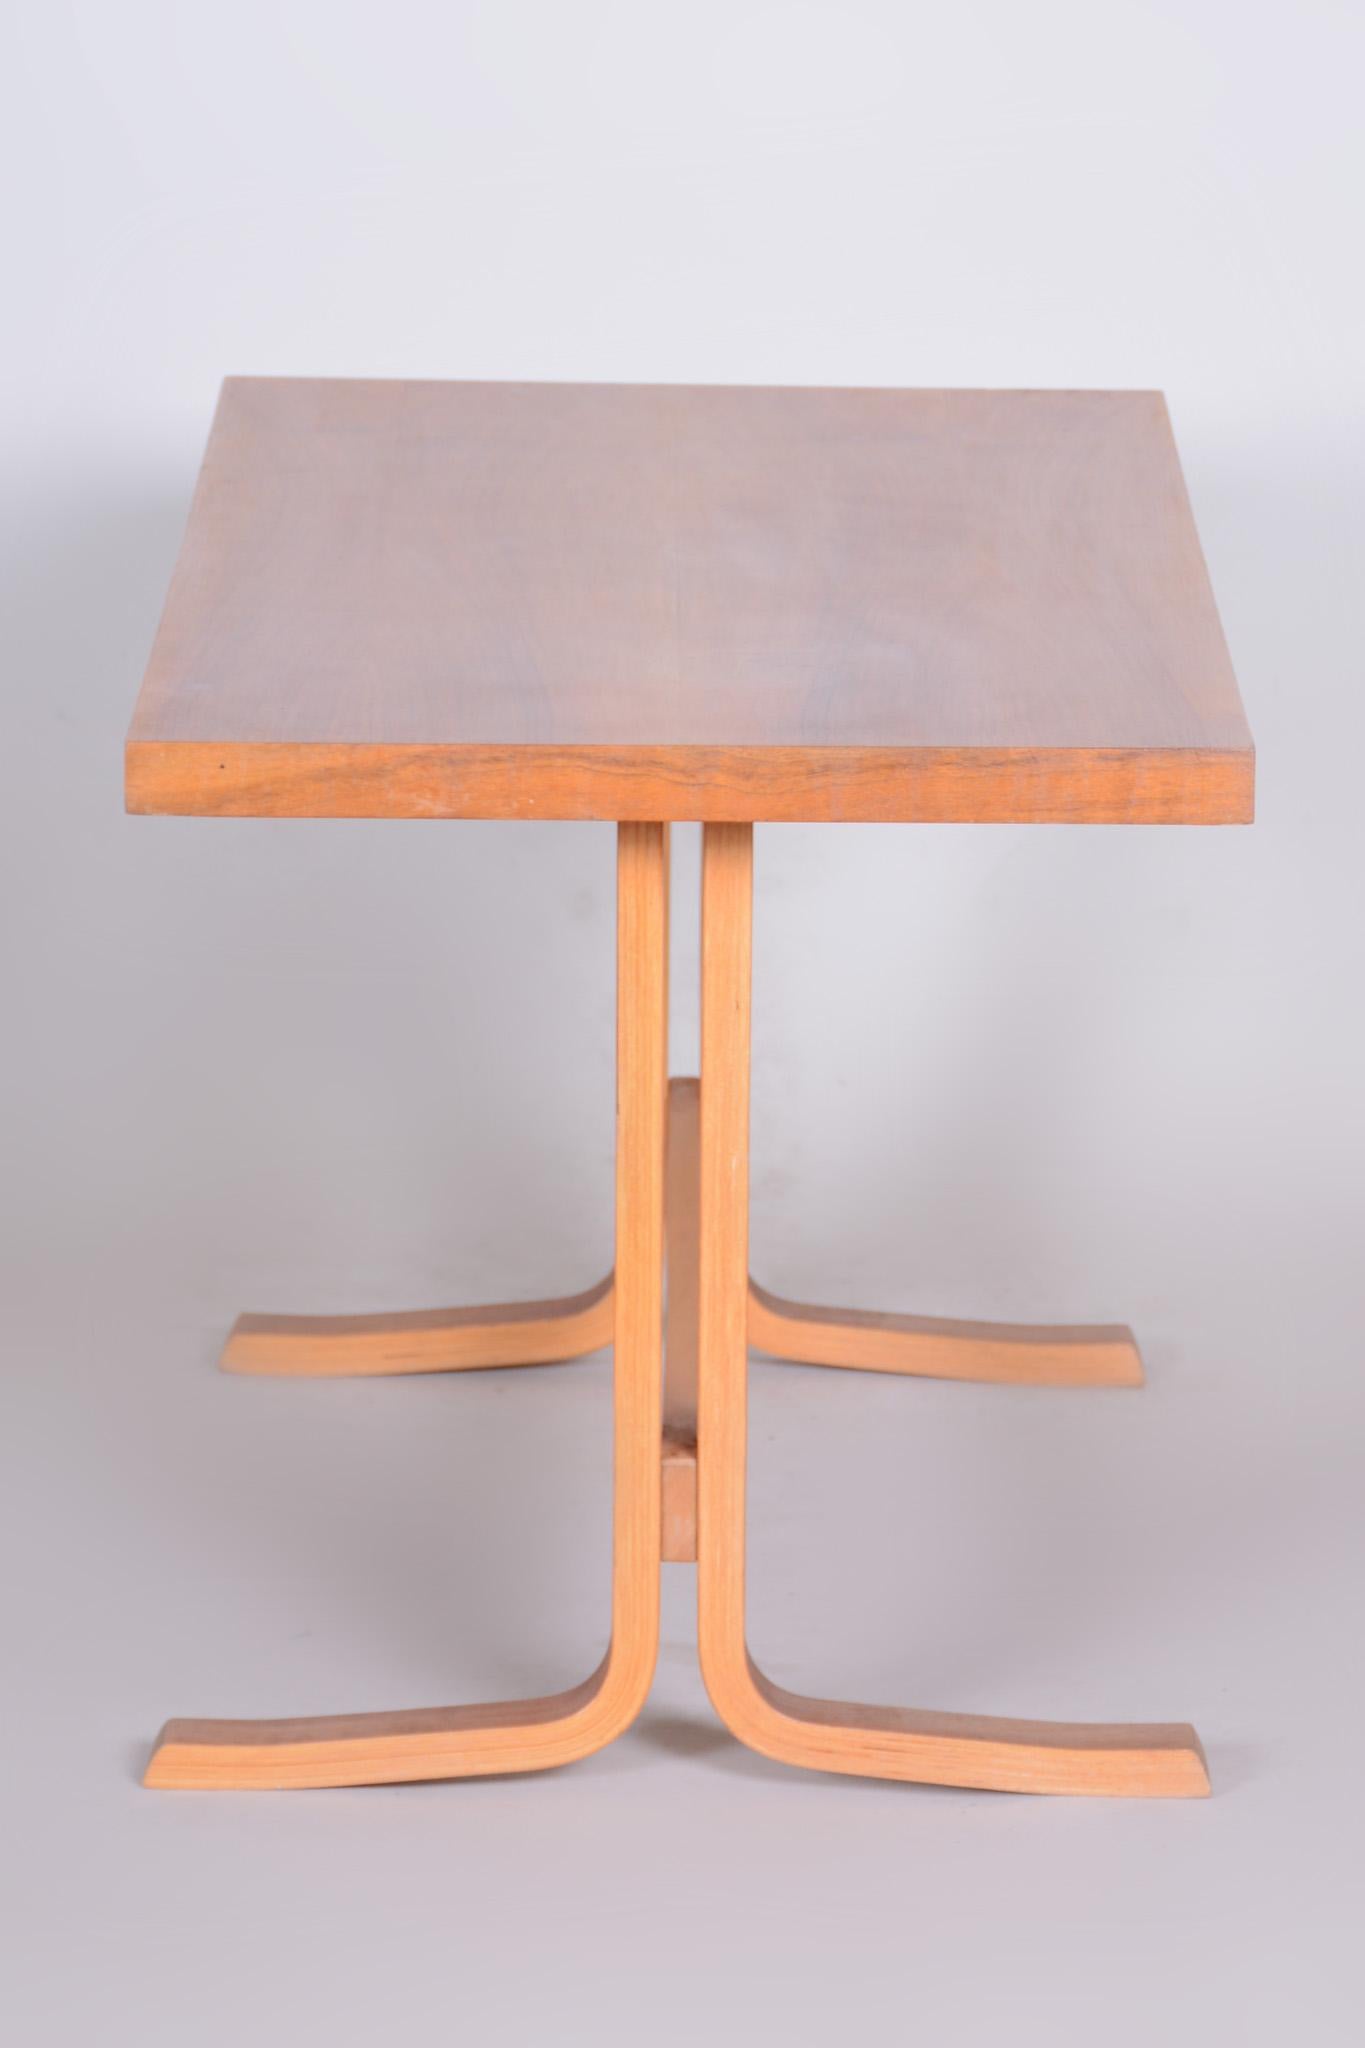 Original Rectangular Oak Table, Czech Mid-Century Modern, 1960s For Sale 2